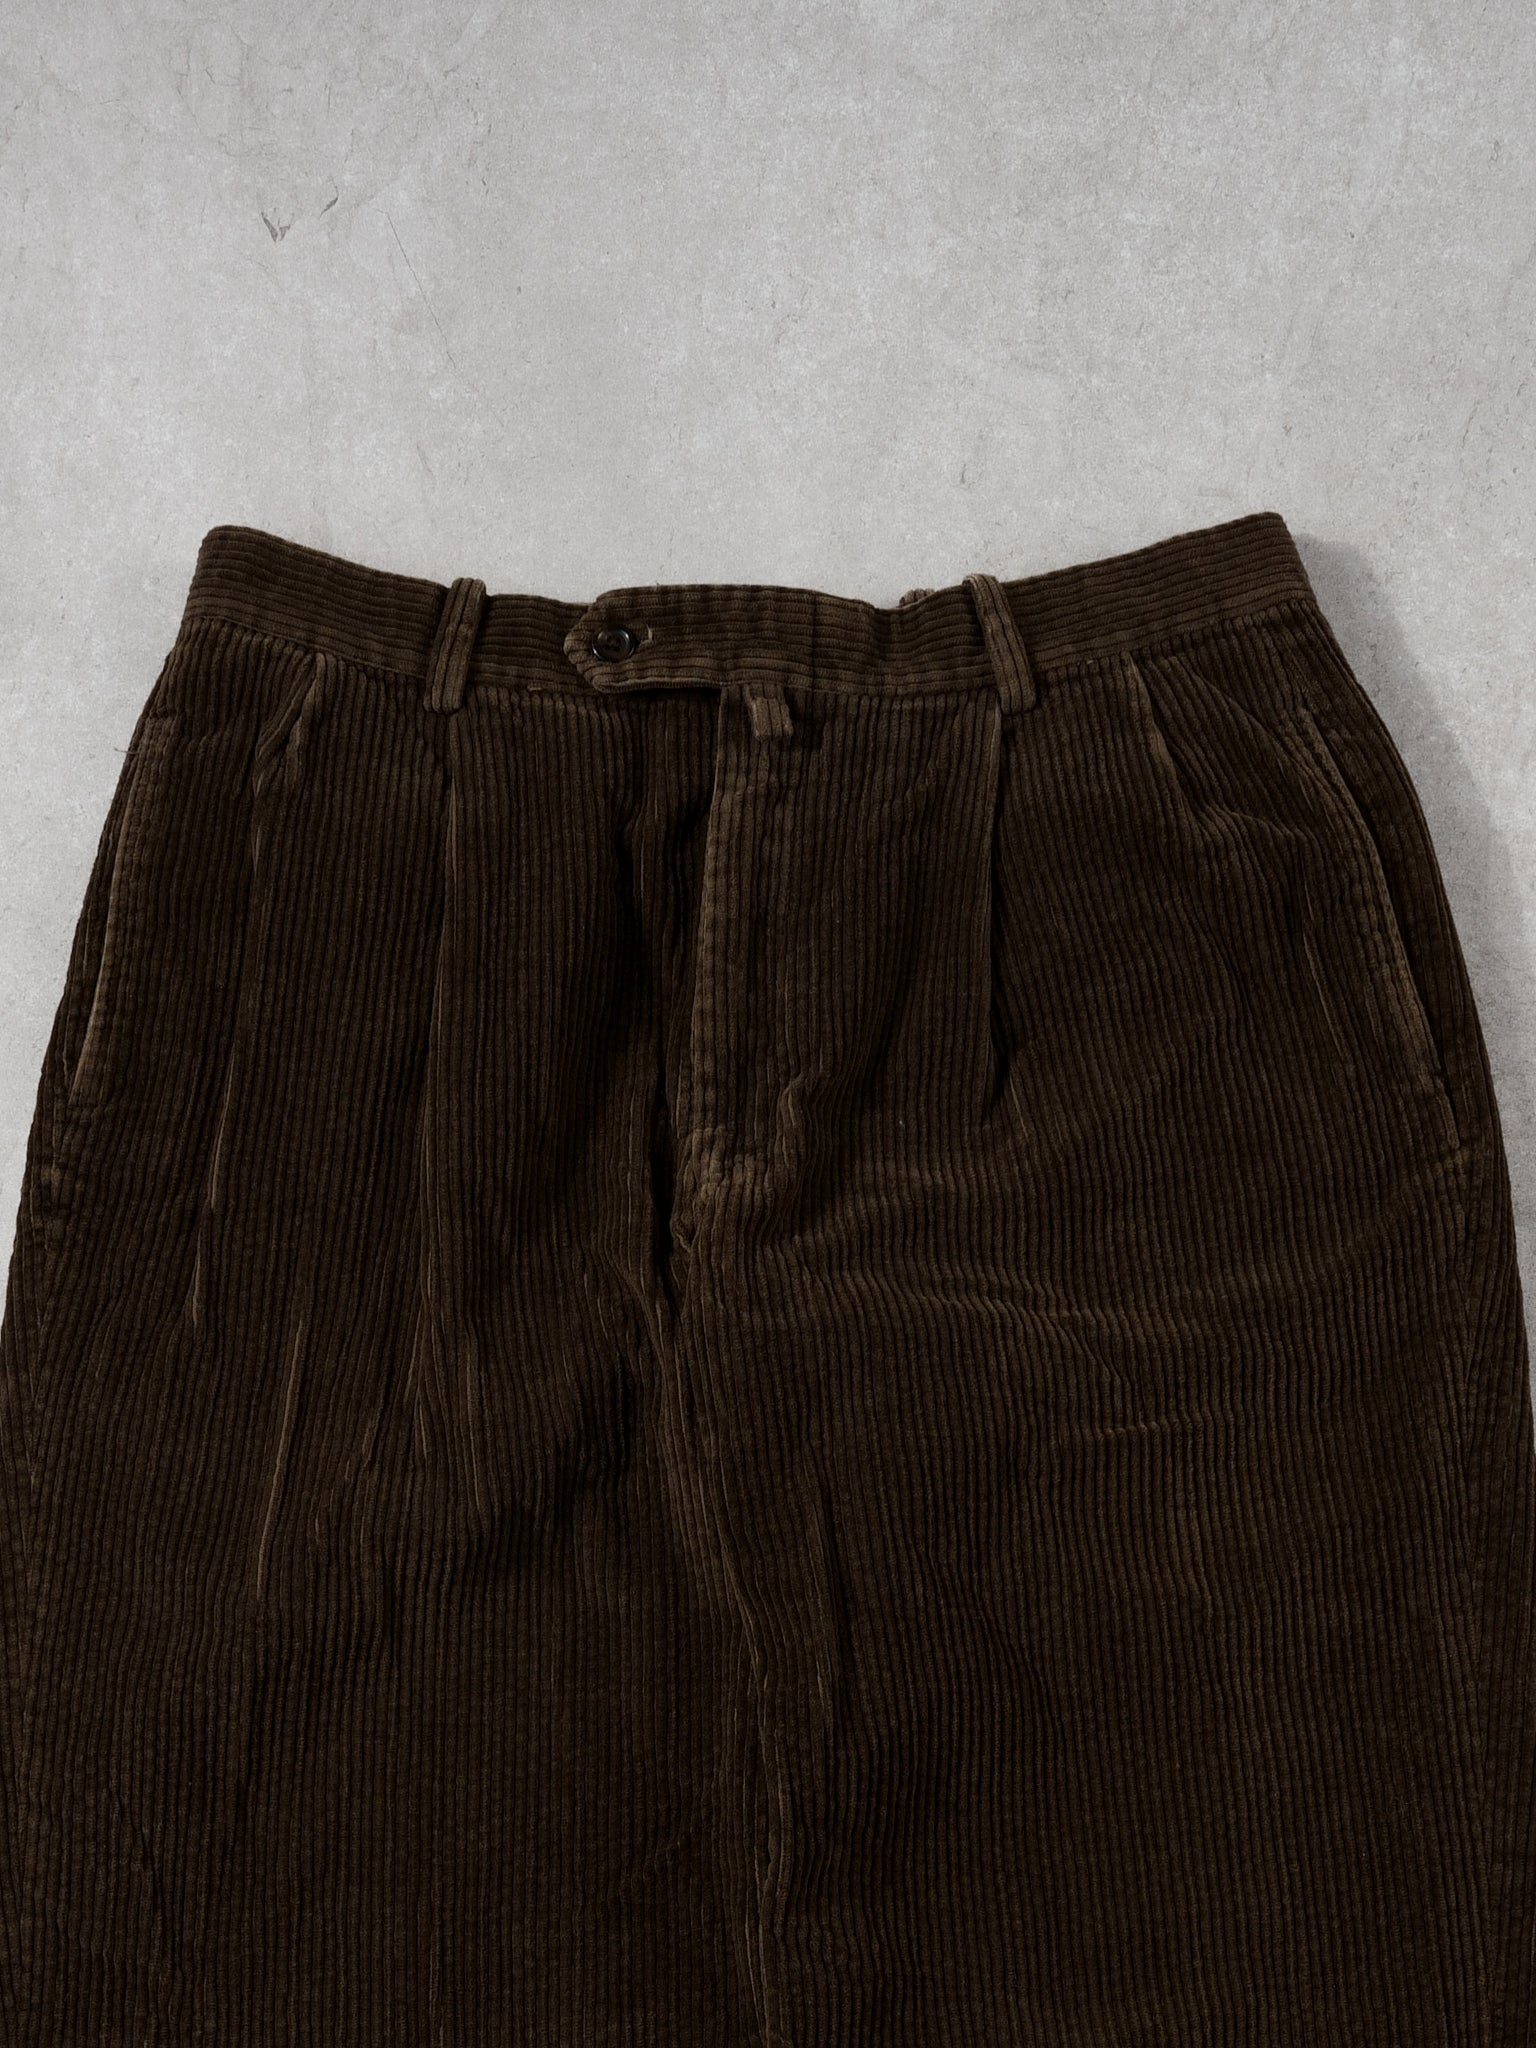 Vintage 70s Brown Tommy Hilfiger Corduroy Pants (30x31)